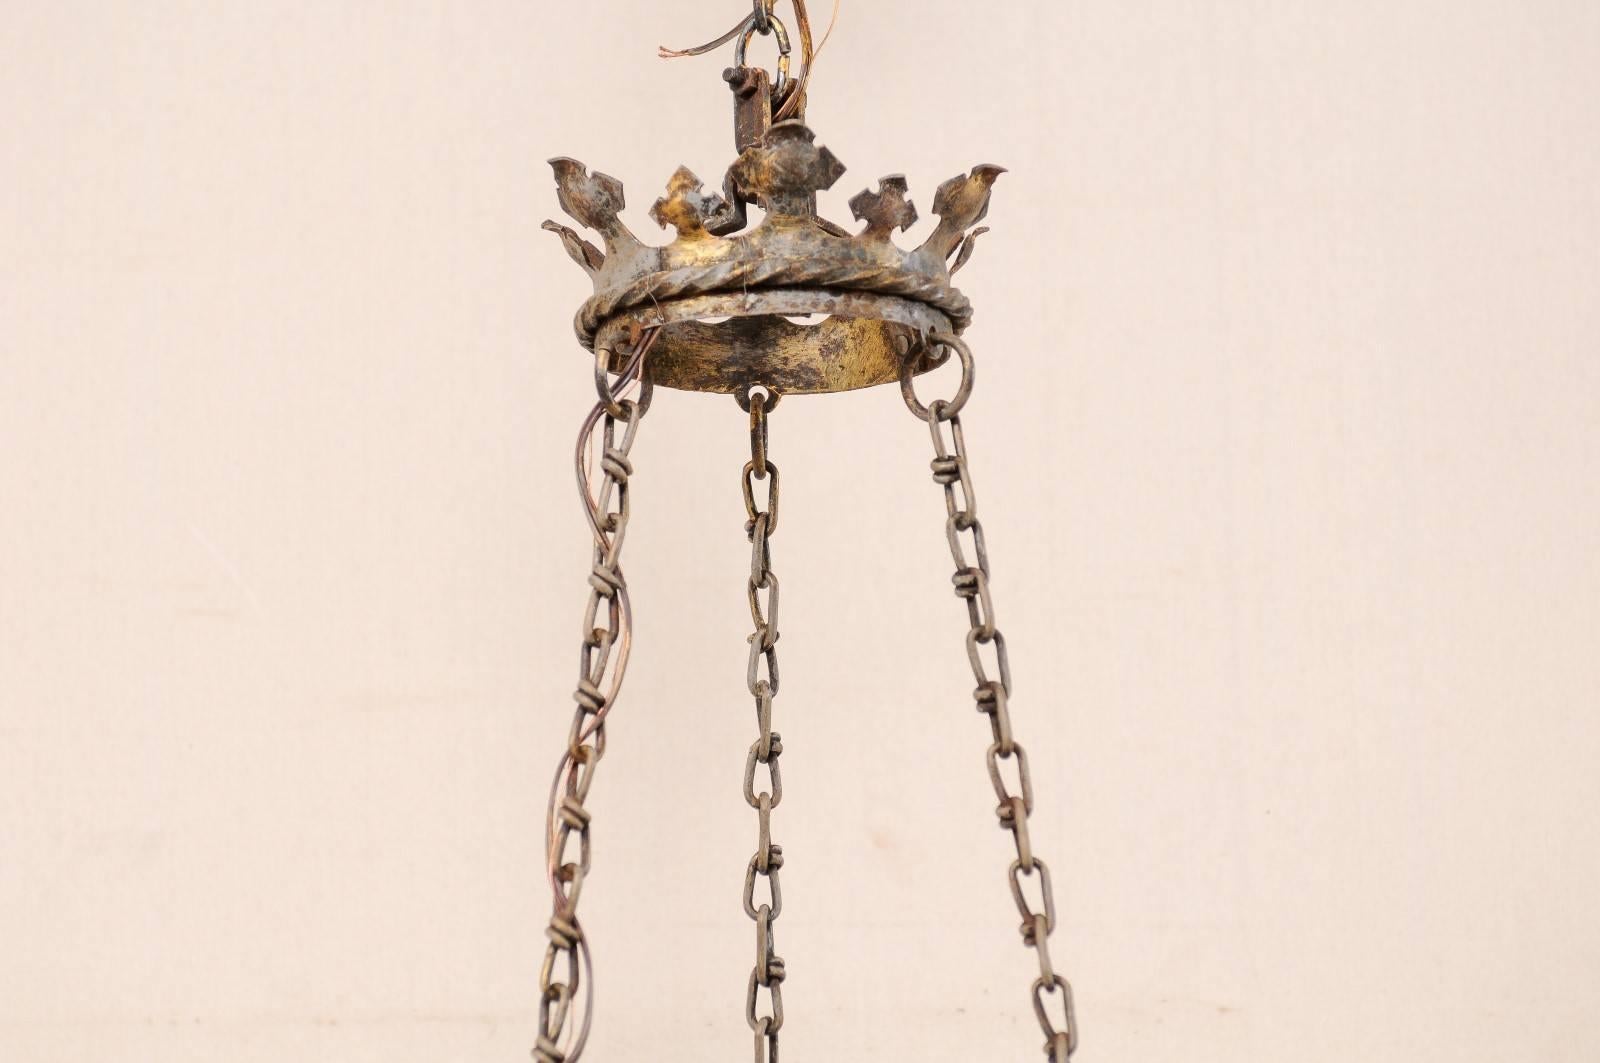 crown shaped chandelier